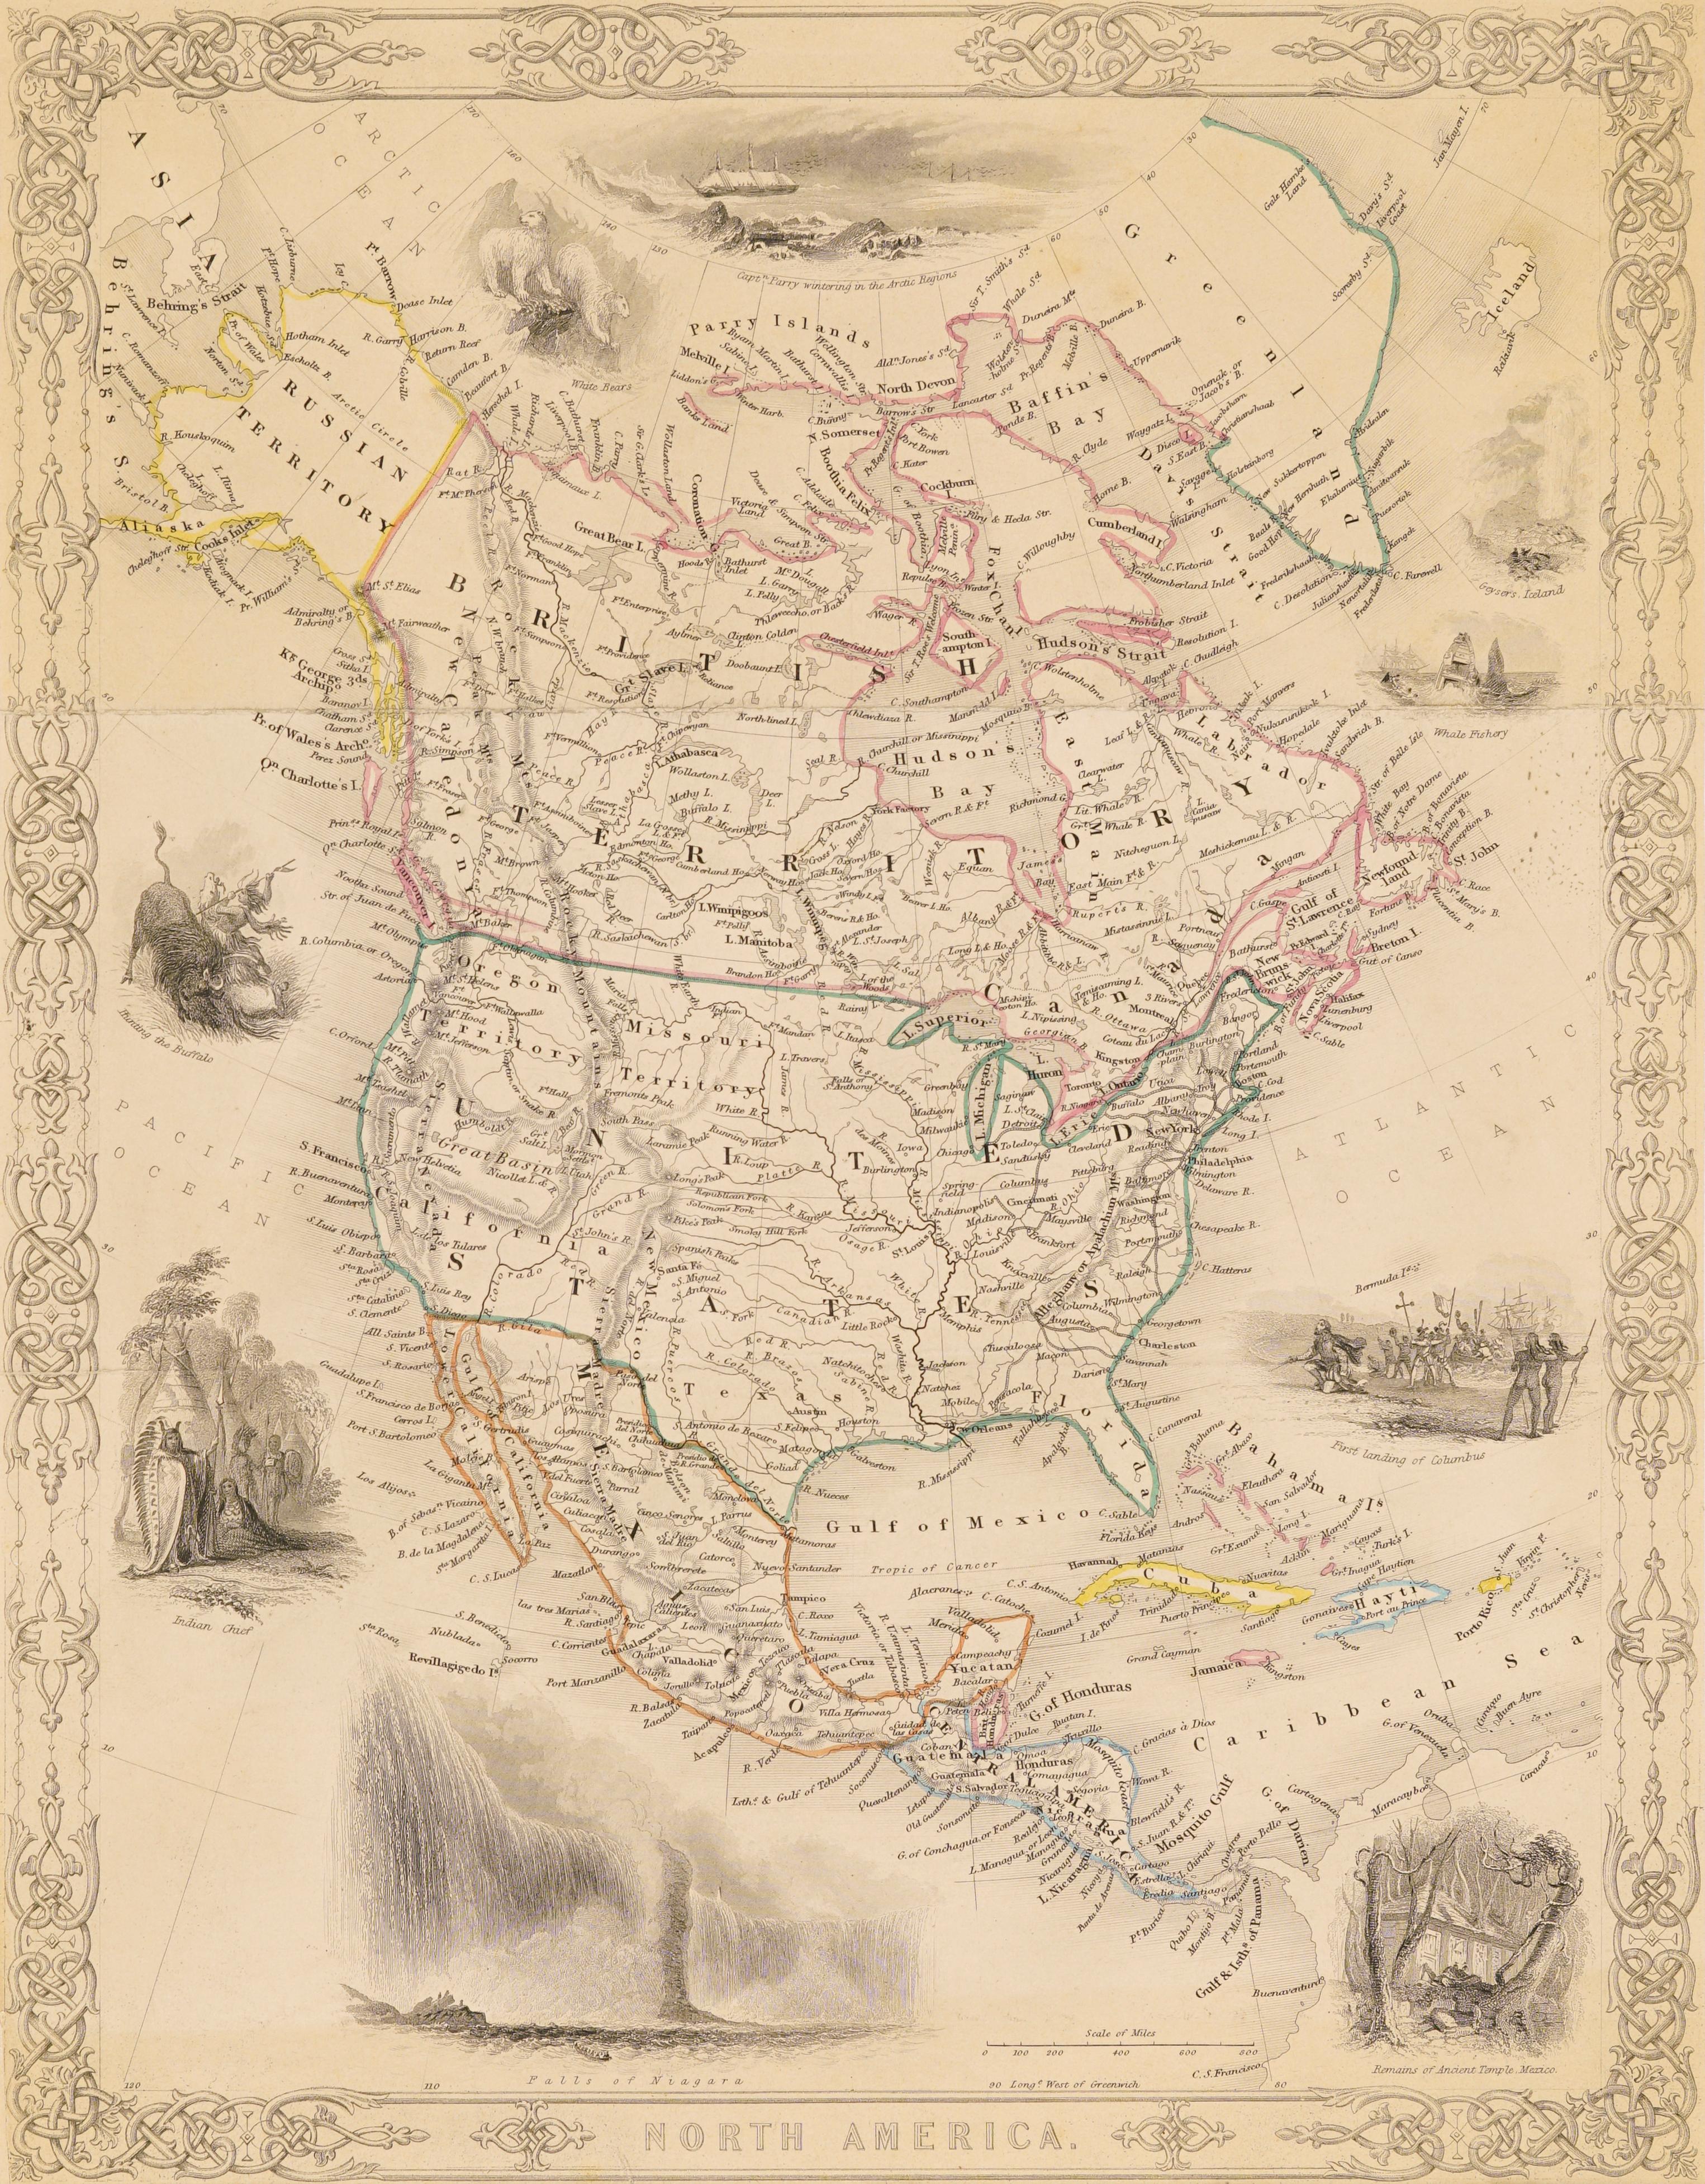 Cirica 1860 Map of North America - Print by George Virtue